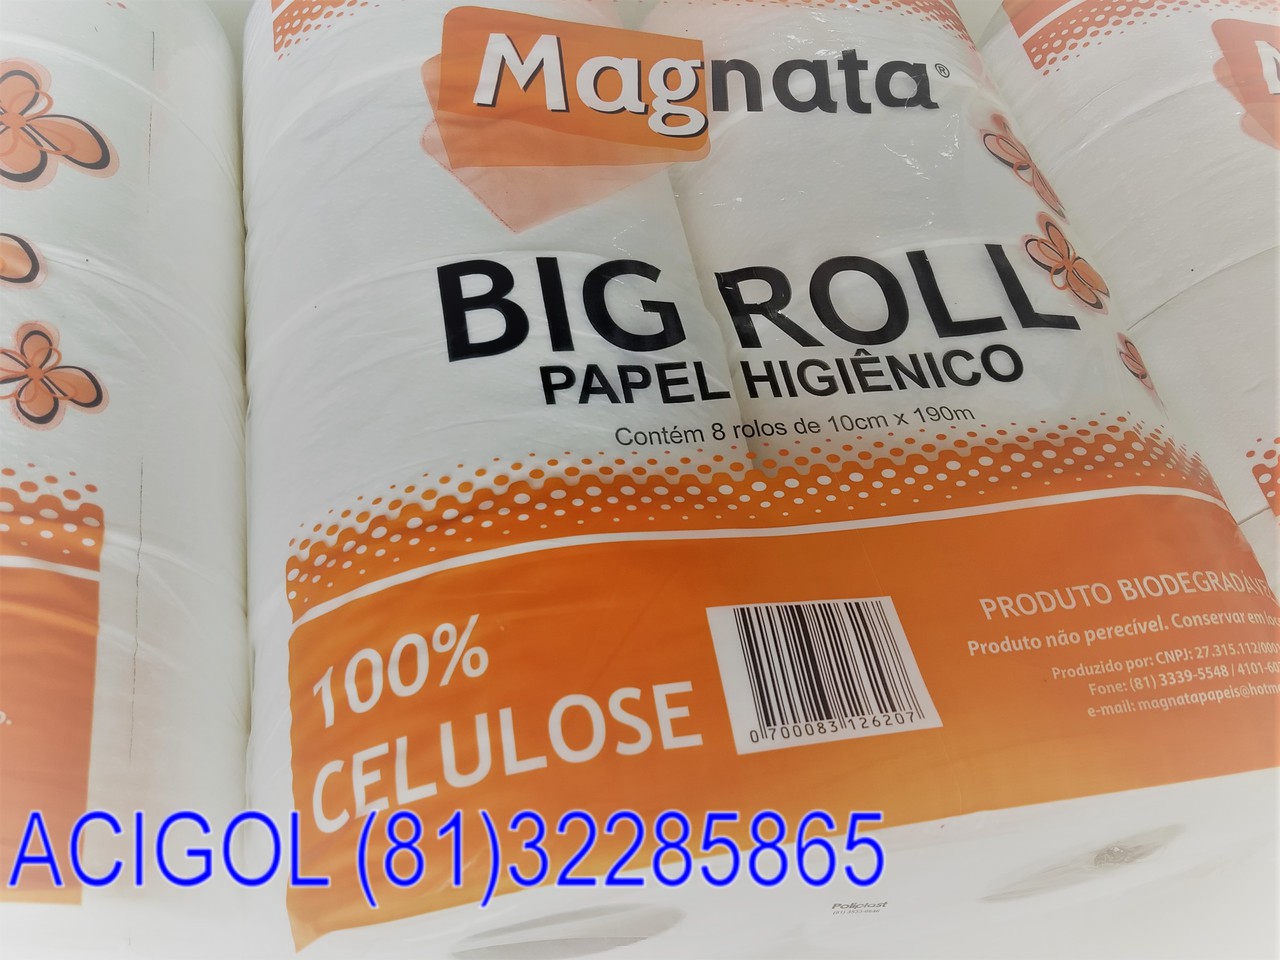 PAPEL HIGIENICO MAGANATA-ACIGOL RECIFE 81 322885865-IMG_20180910_091728278_BURST001